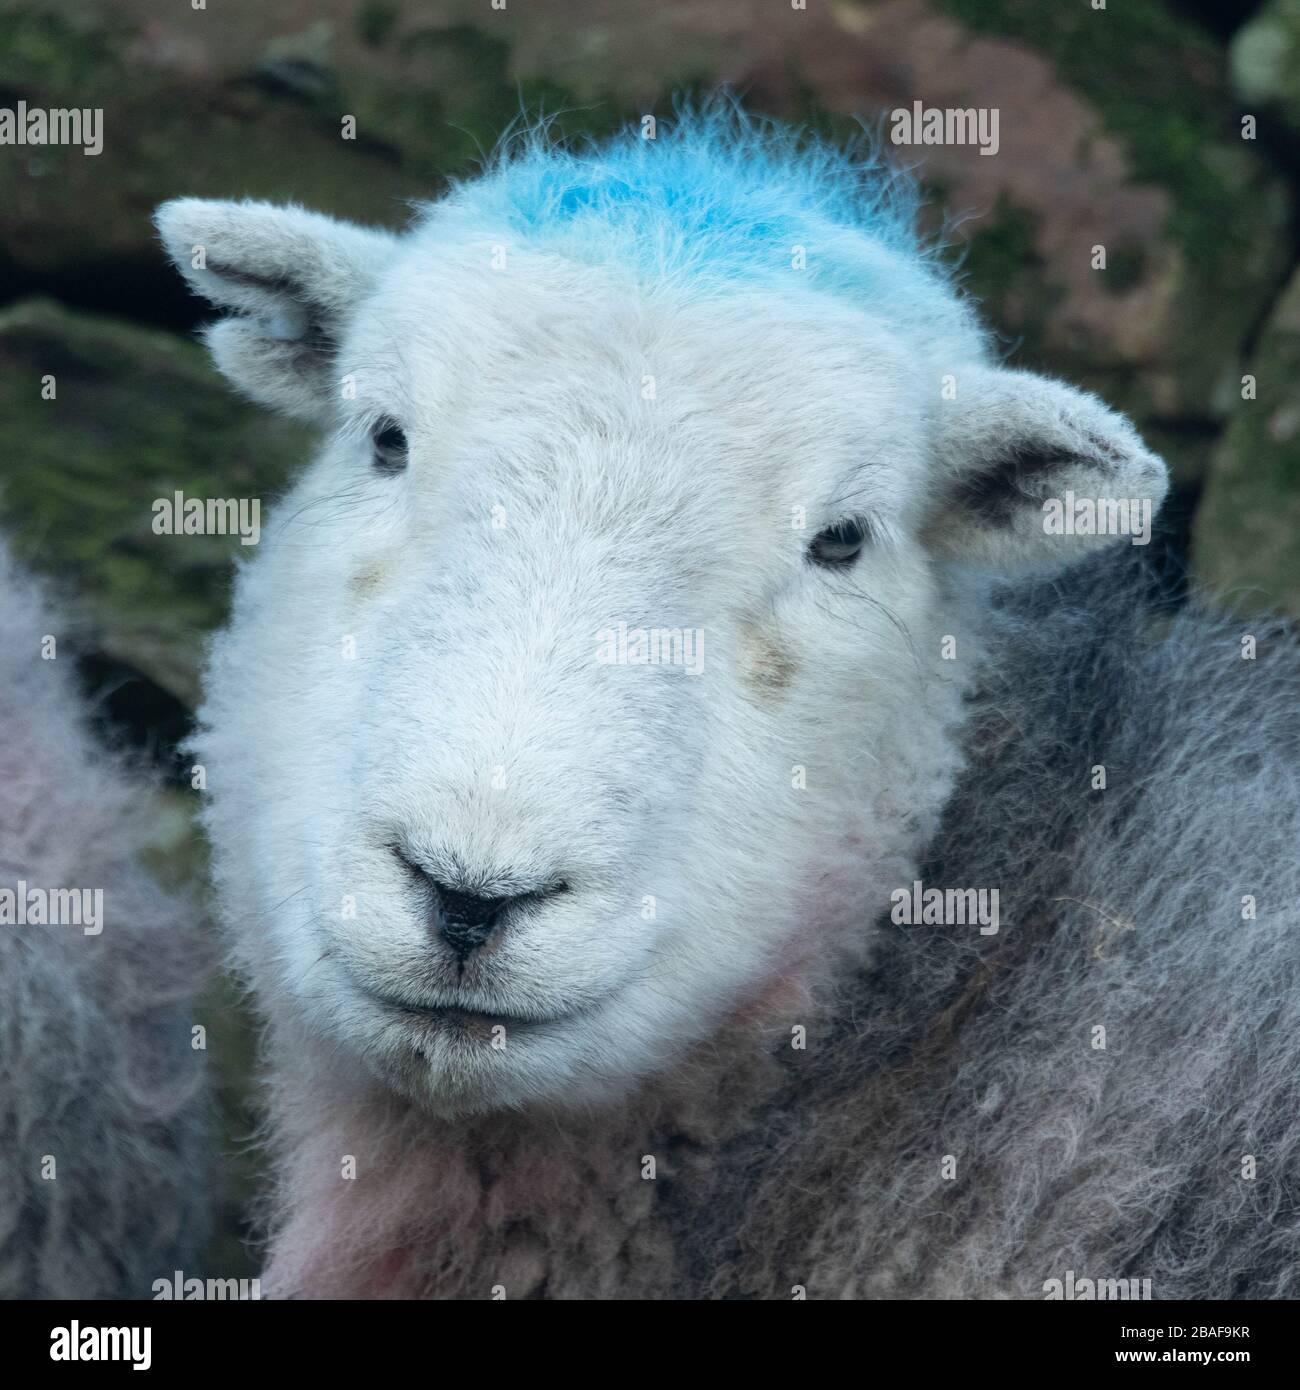 Sheep with blue sprayed head Stock Photo